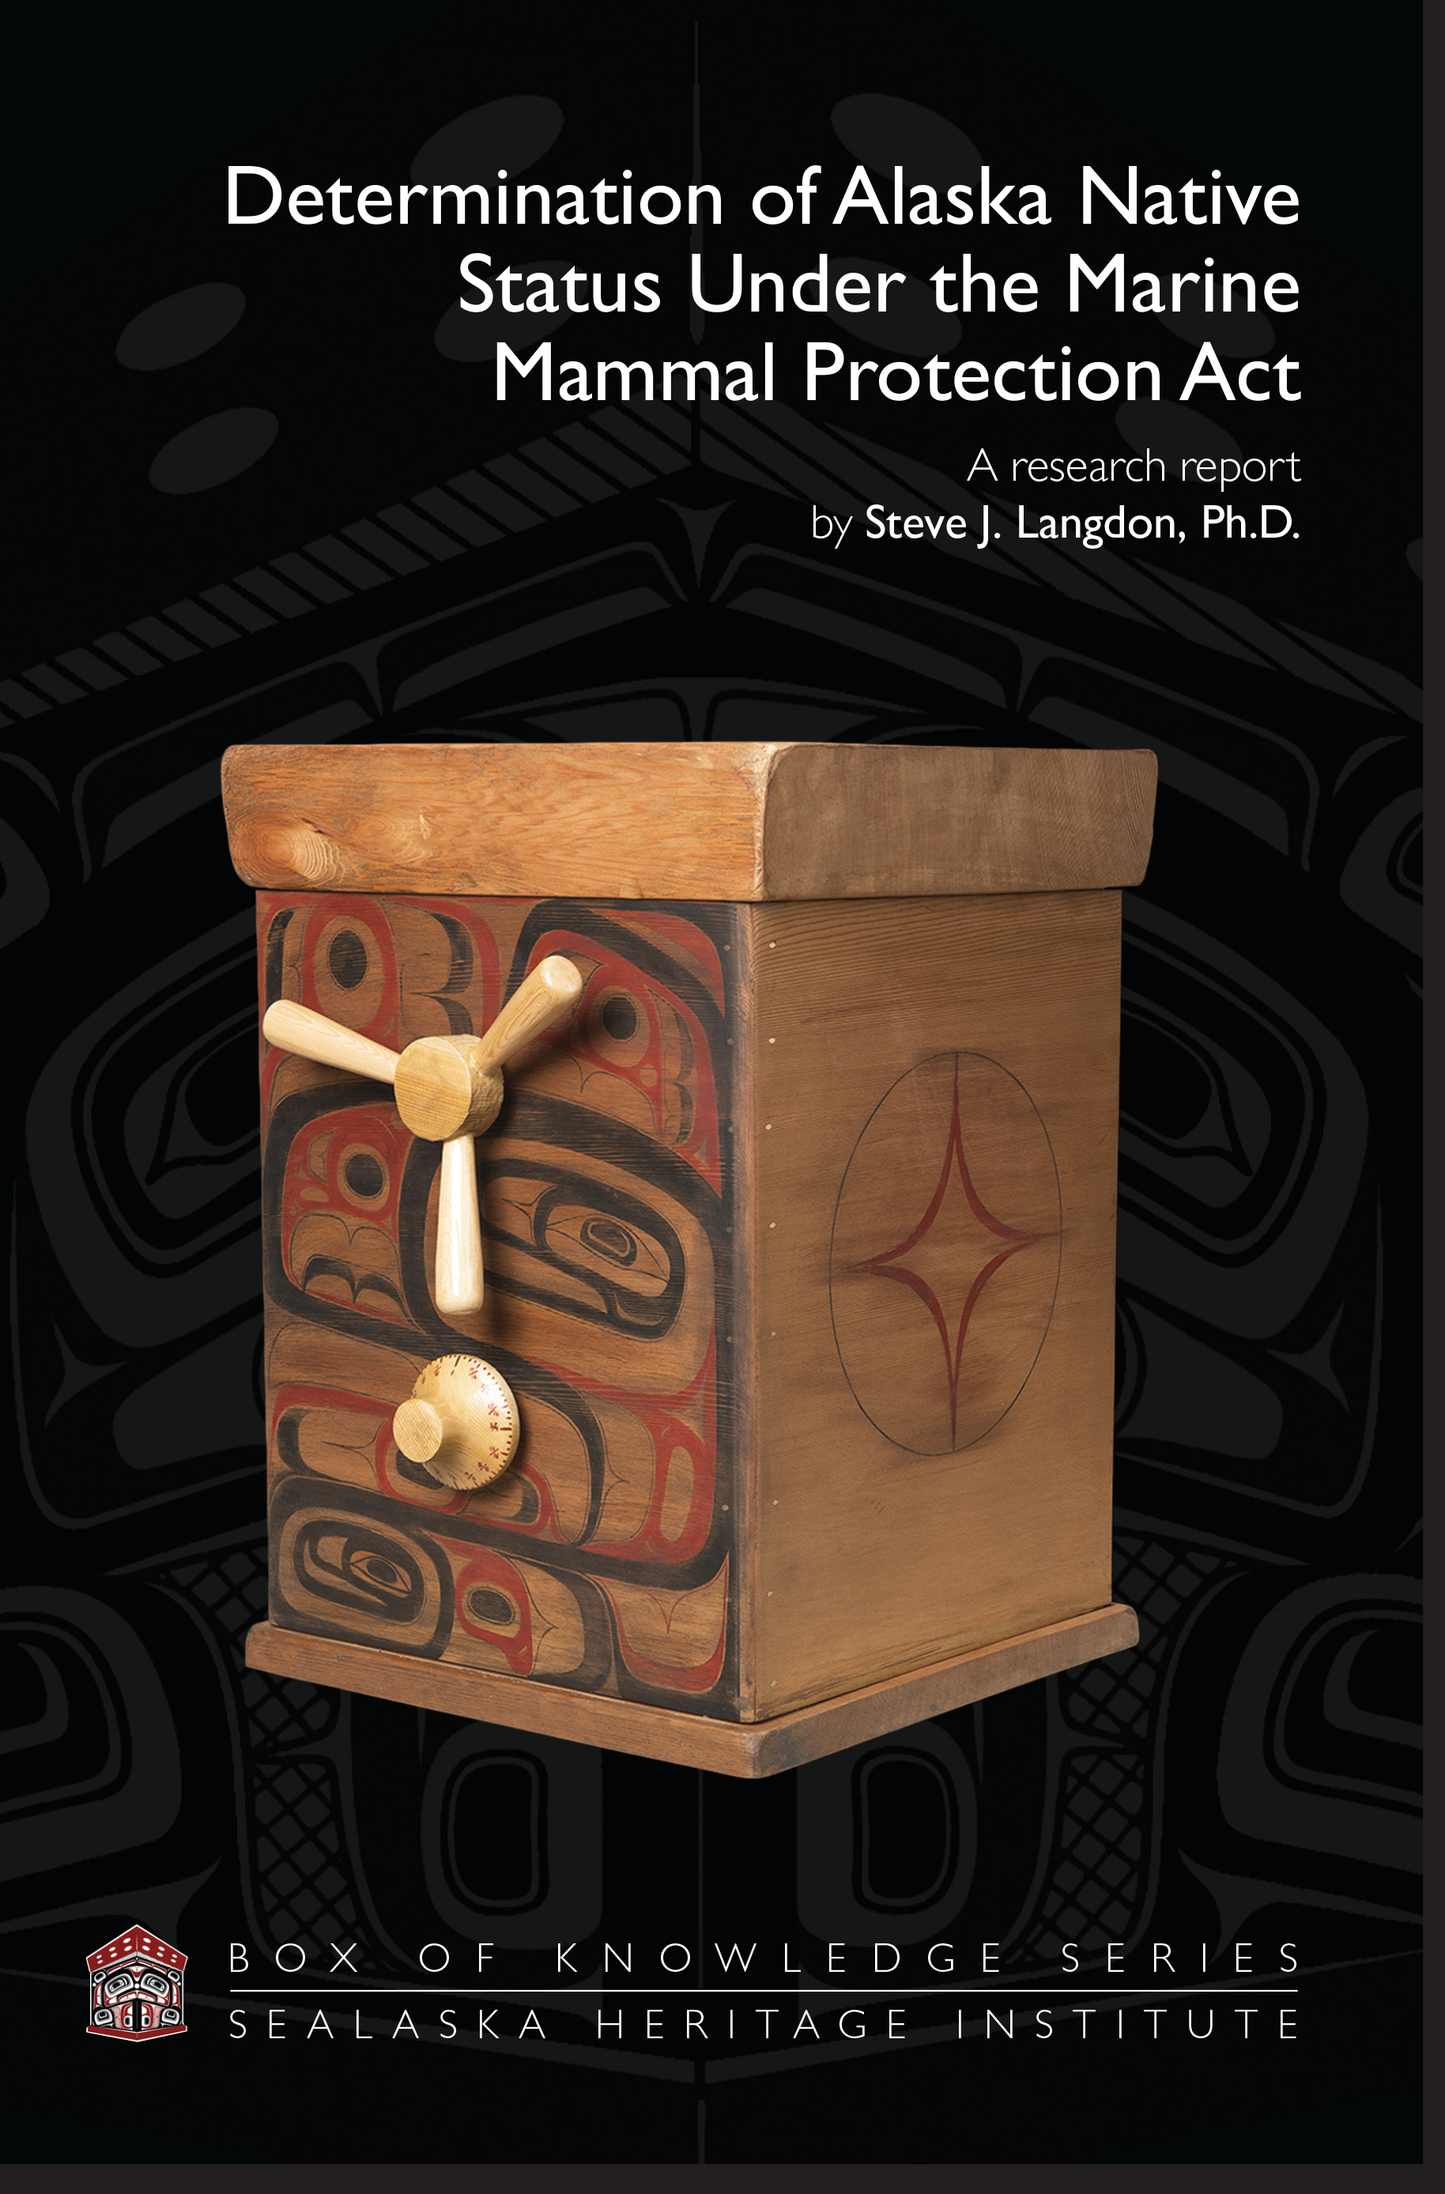 Book, BOK - "Determination of Alaska Native Status Under the Marine Mammal Protection Act""